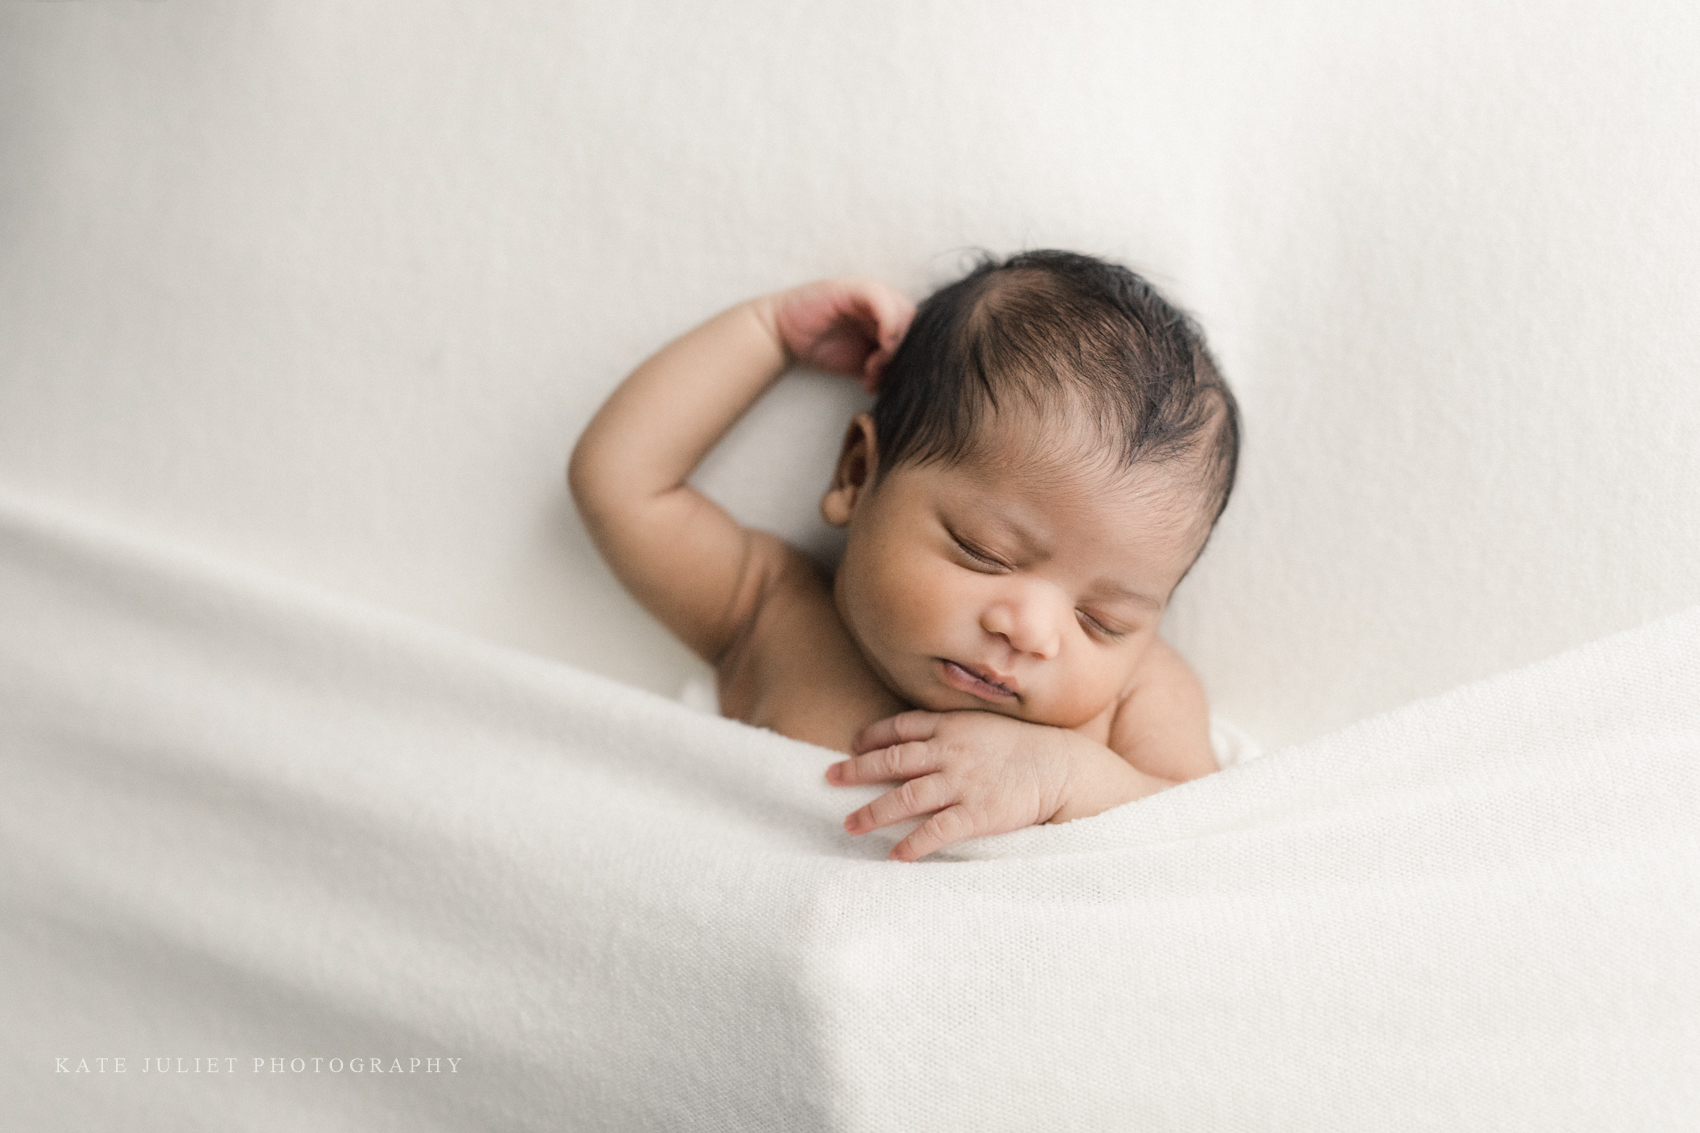 kate_juliet_photography-newborn_web-103.jpg